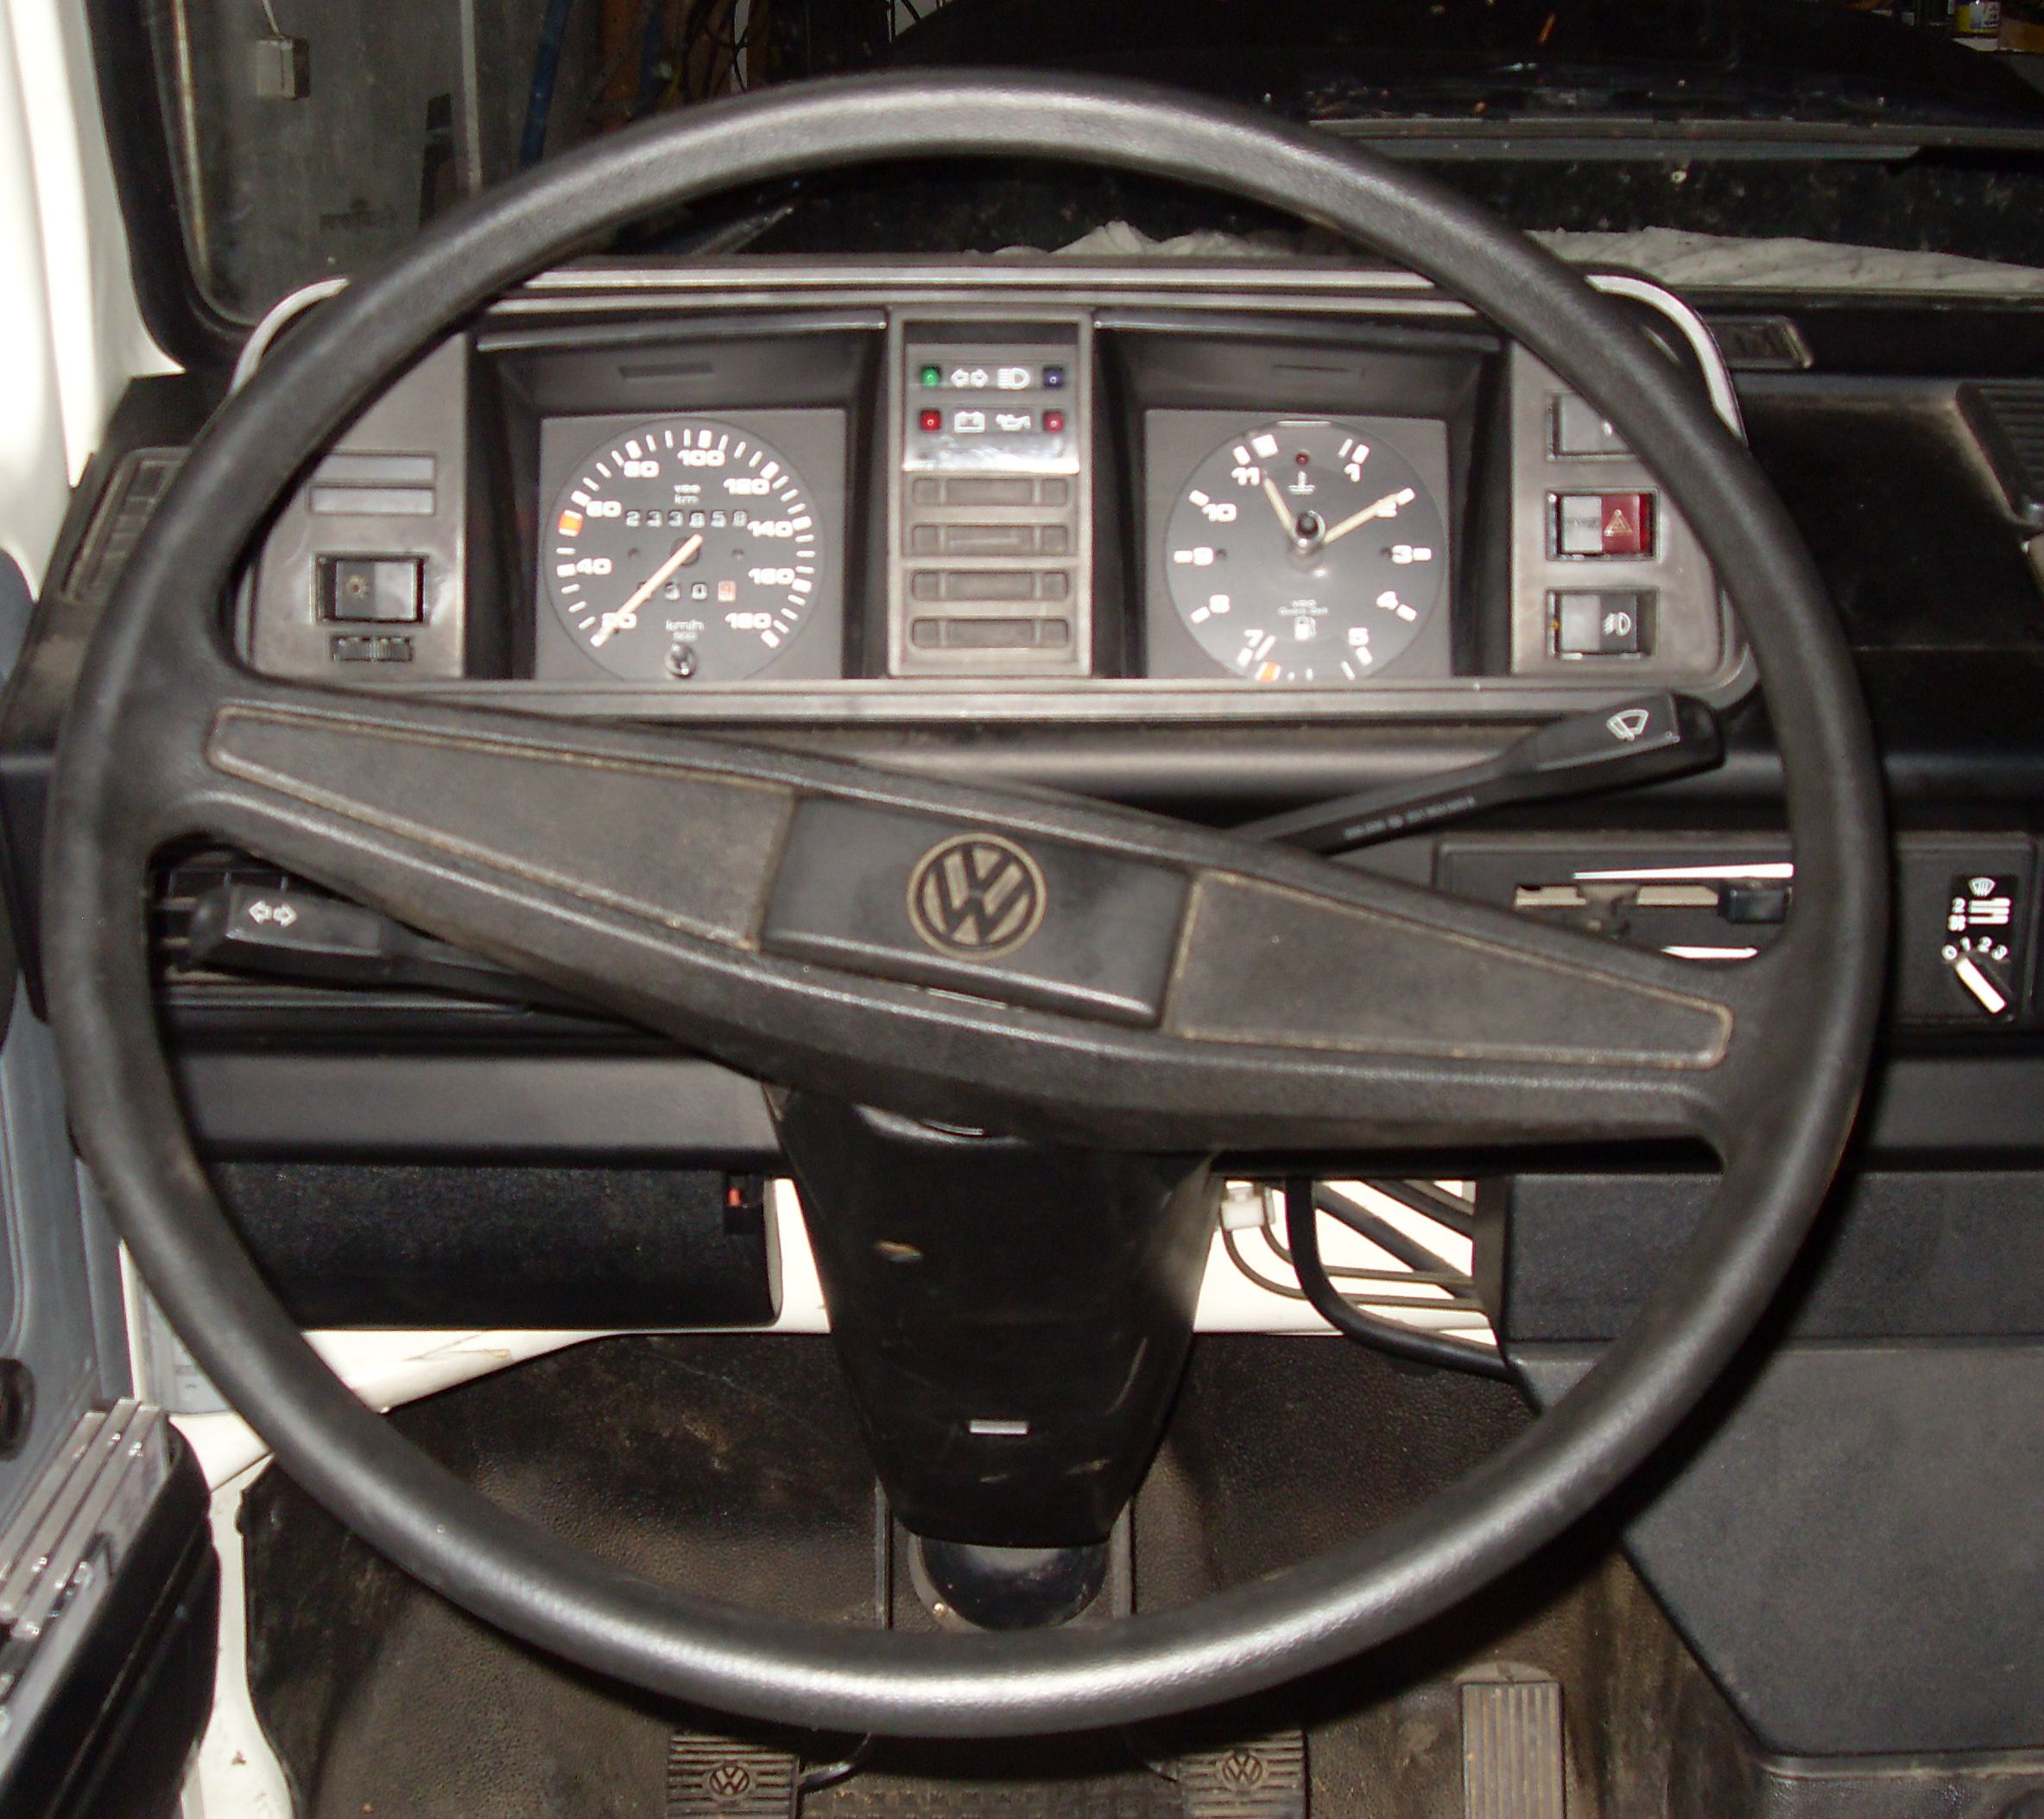 File:VW T3 front 20080127.jpg - Wikimedia Commons